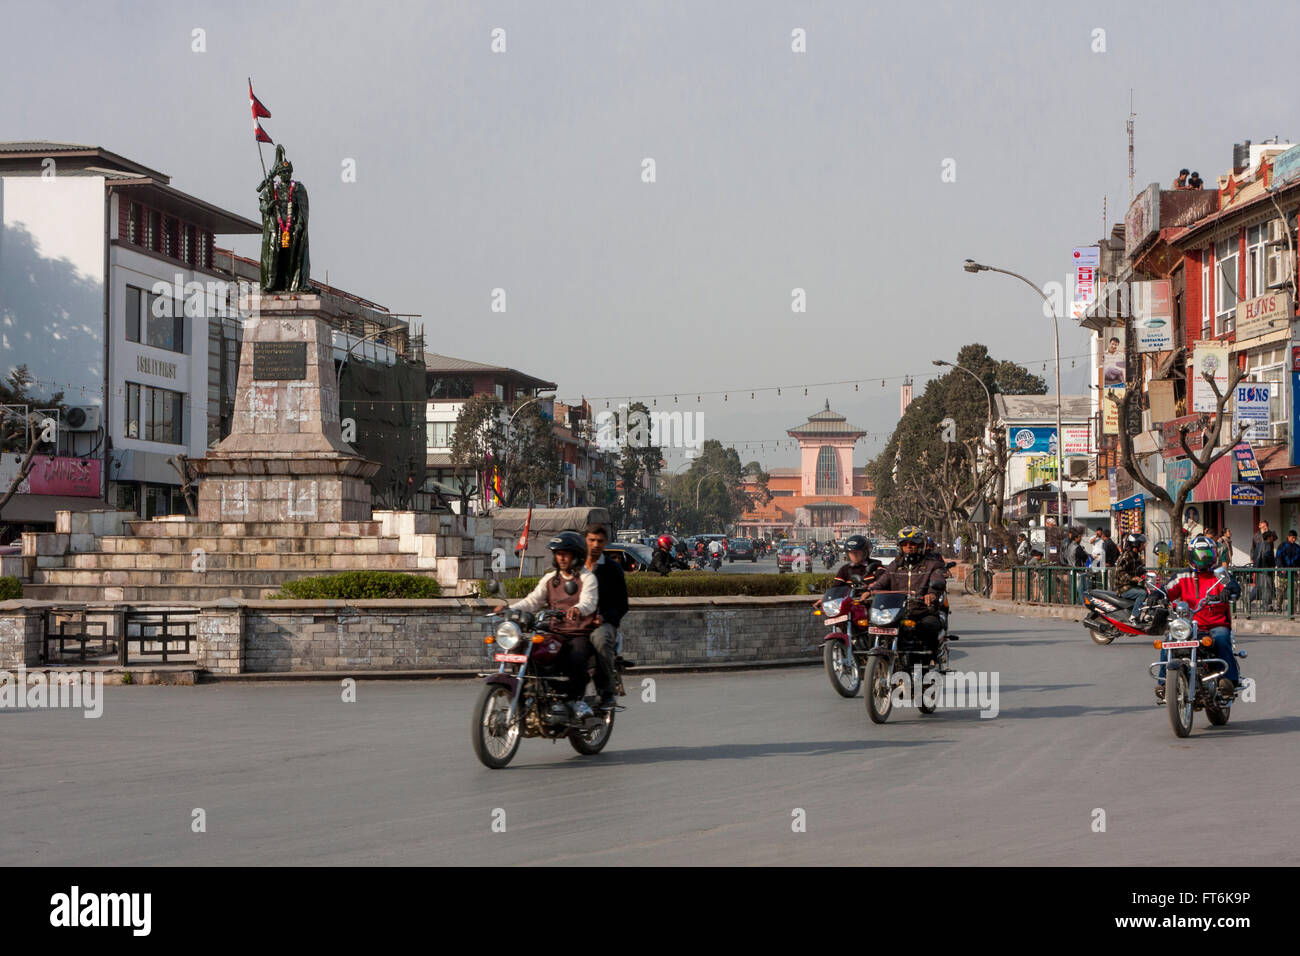 Il Nepal, Kathmandu. Durbar Marg Street. Narayanhiti Royal Palace (ora museo) in background, re Mahendra Statua in primo piano. Foto Stock